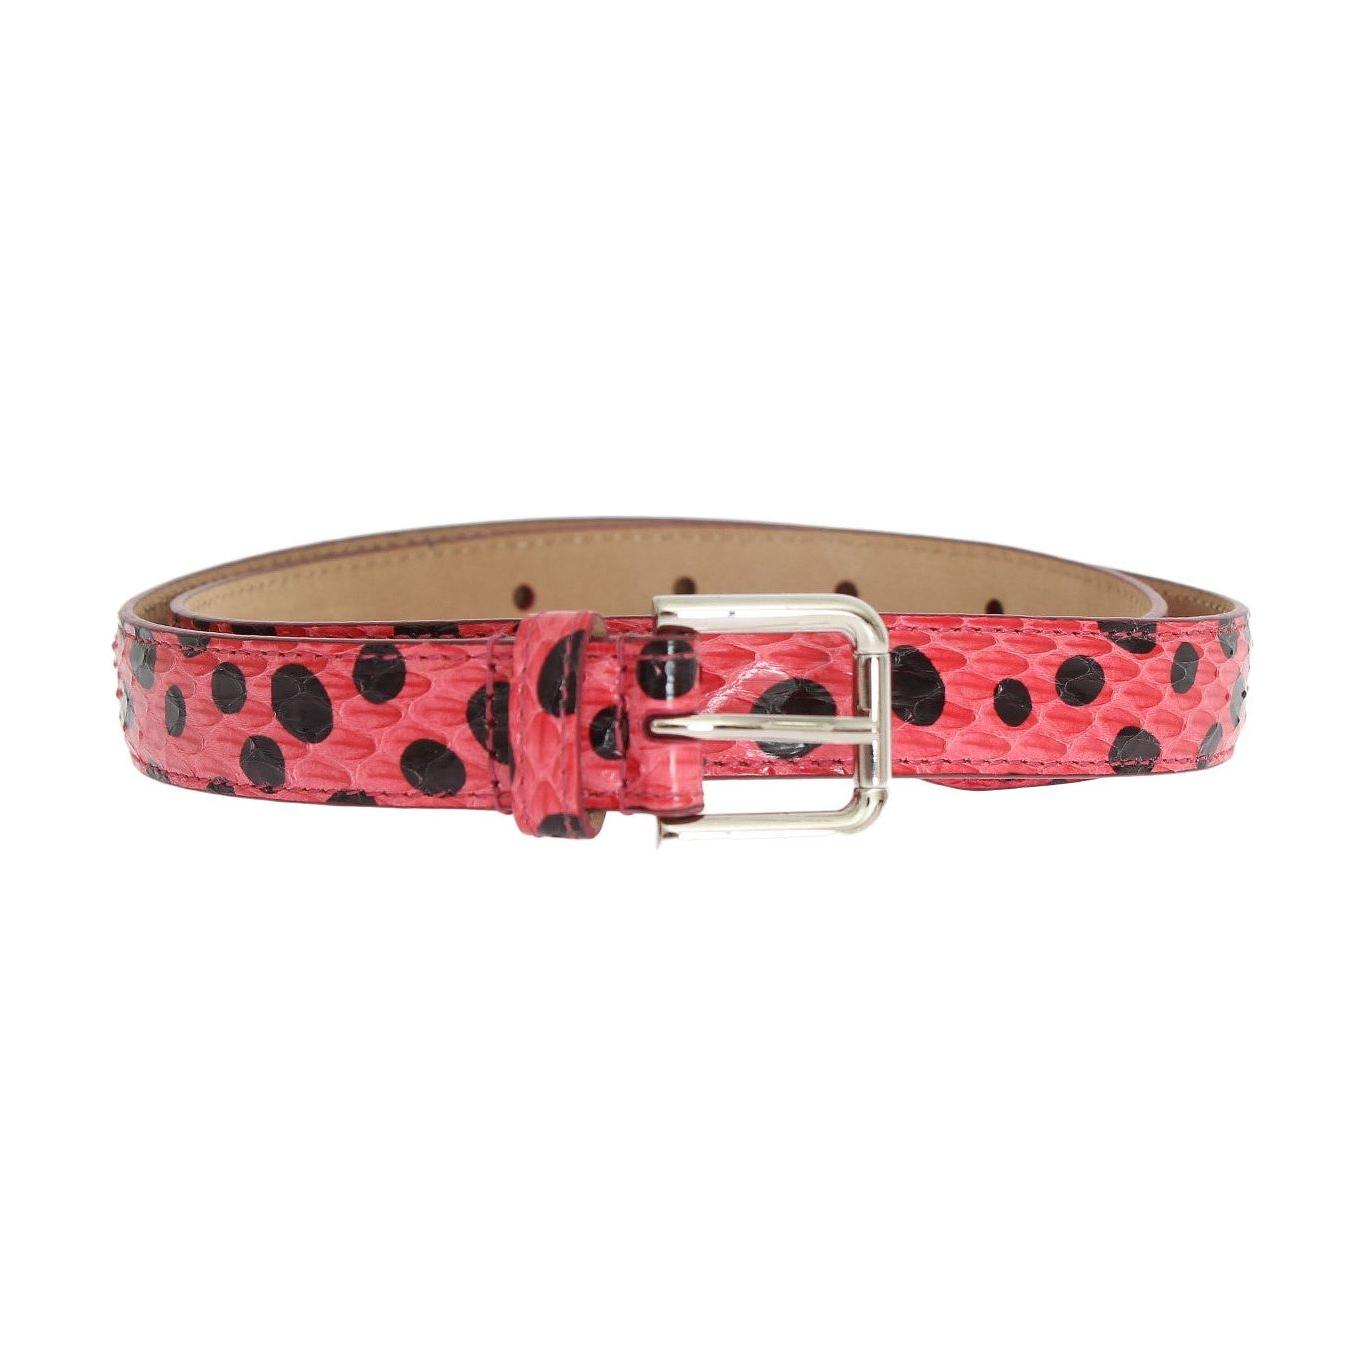 Dolce & Gabbana Polka Dot Snakeskin Belt with Silver Buckle pink-polka-snakeskin-silver-buckle-belt Belt 472628-pink-polka-snakeskin-silver-buckle-belt.jpg